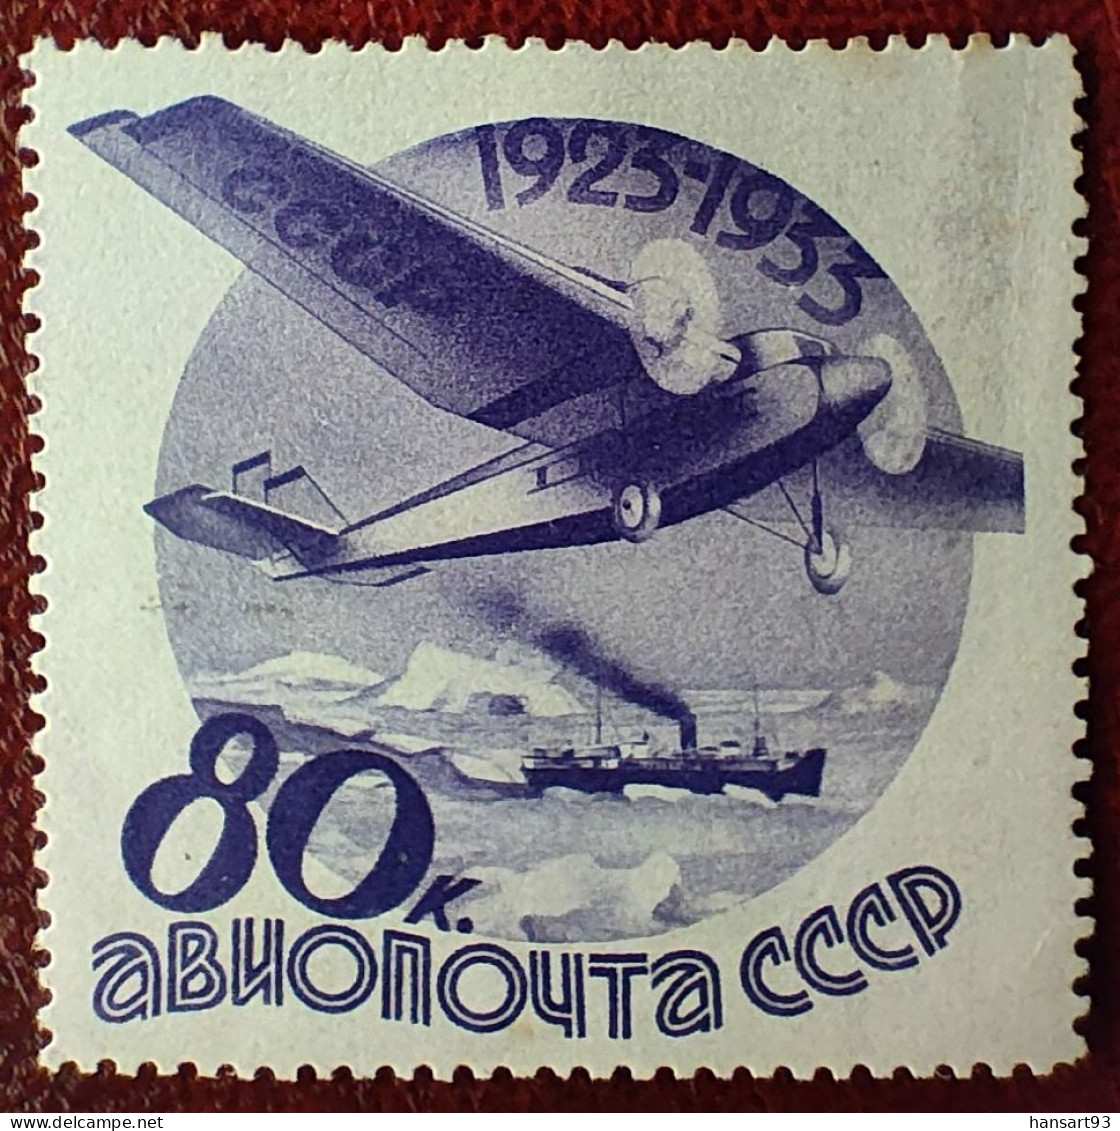 URSS Rare Poste Aérienne N° 45 N* TTB ! Cote 2020 : 50,00 Euros ! A Voir Absolument !! - Unused Stamps